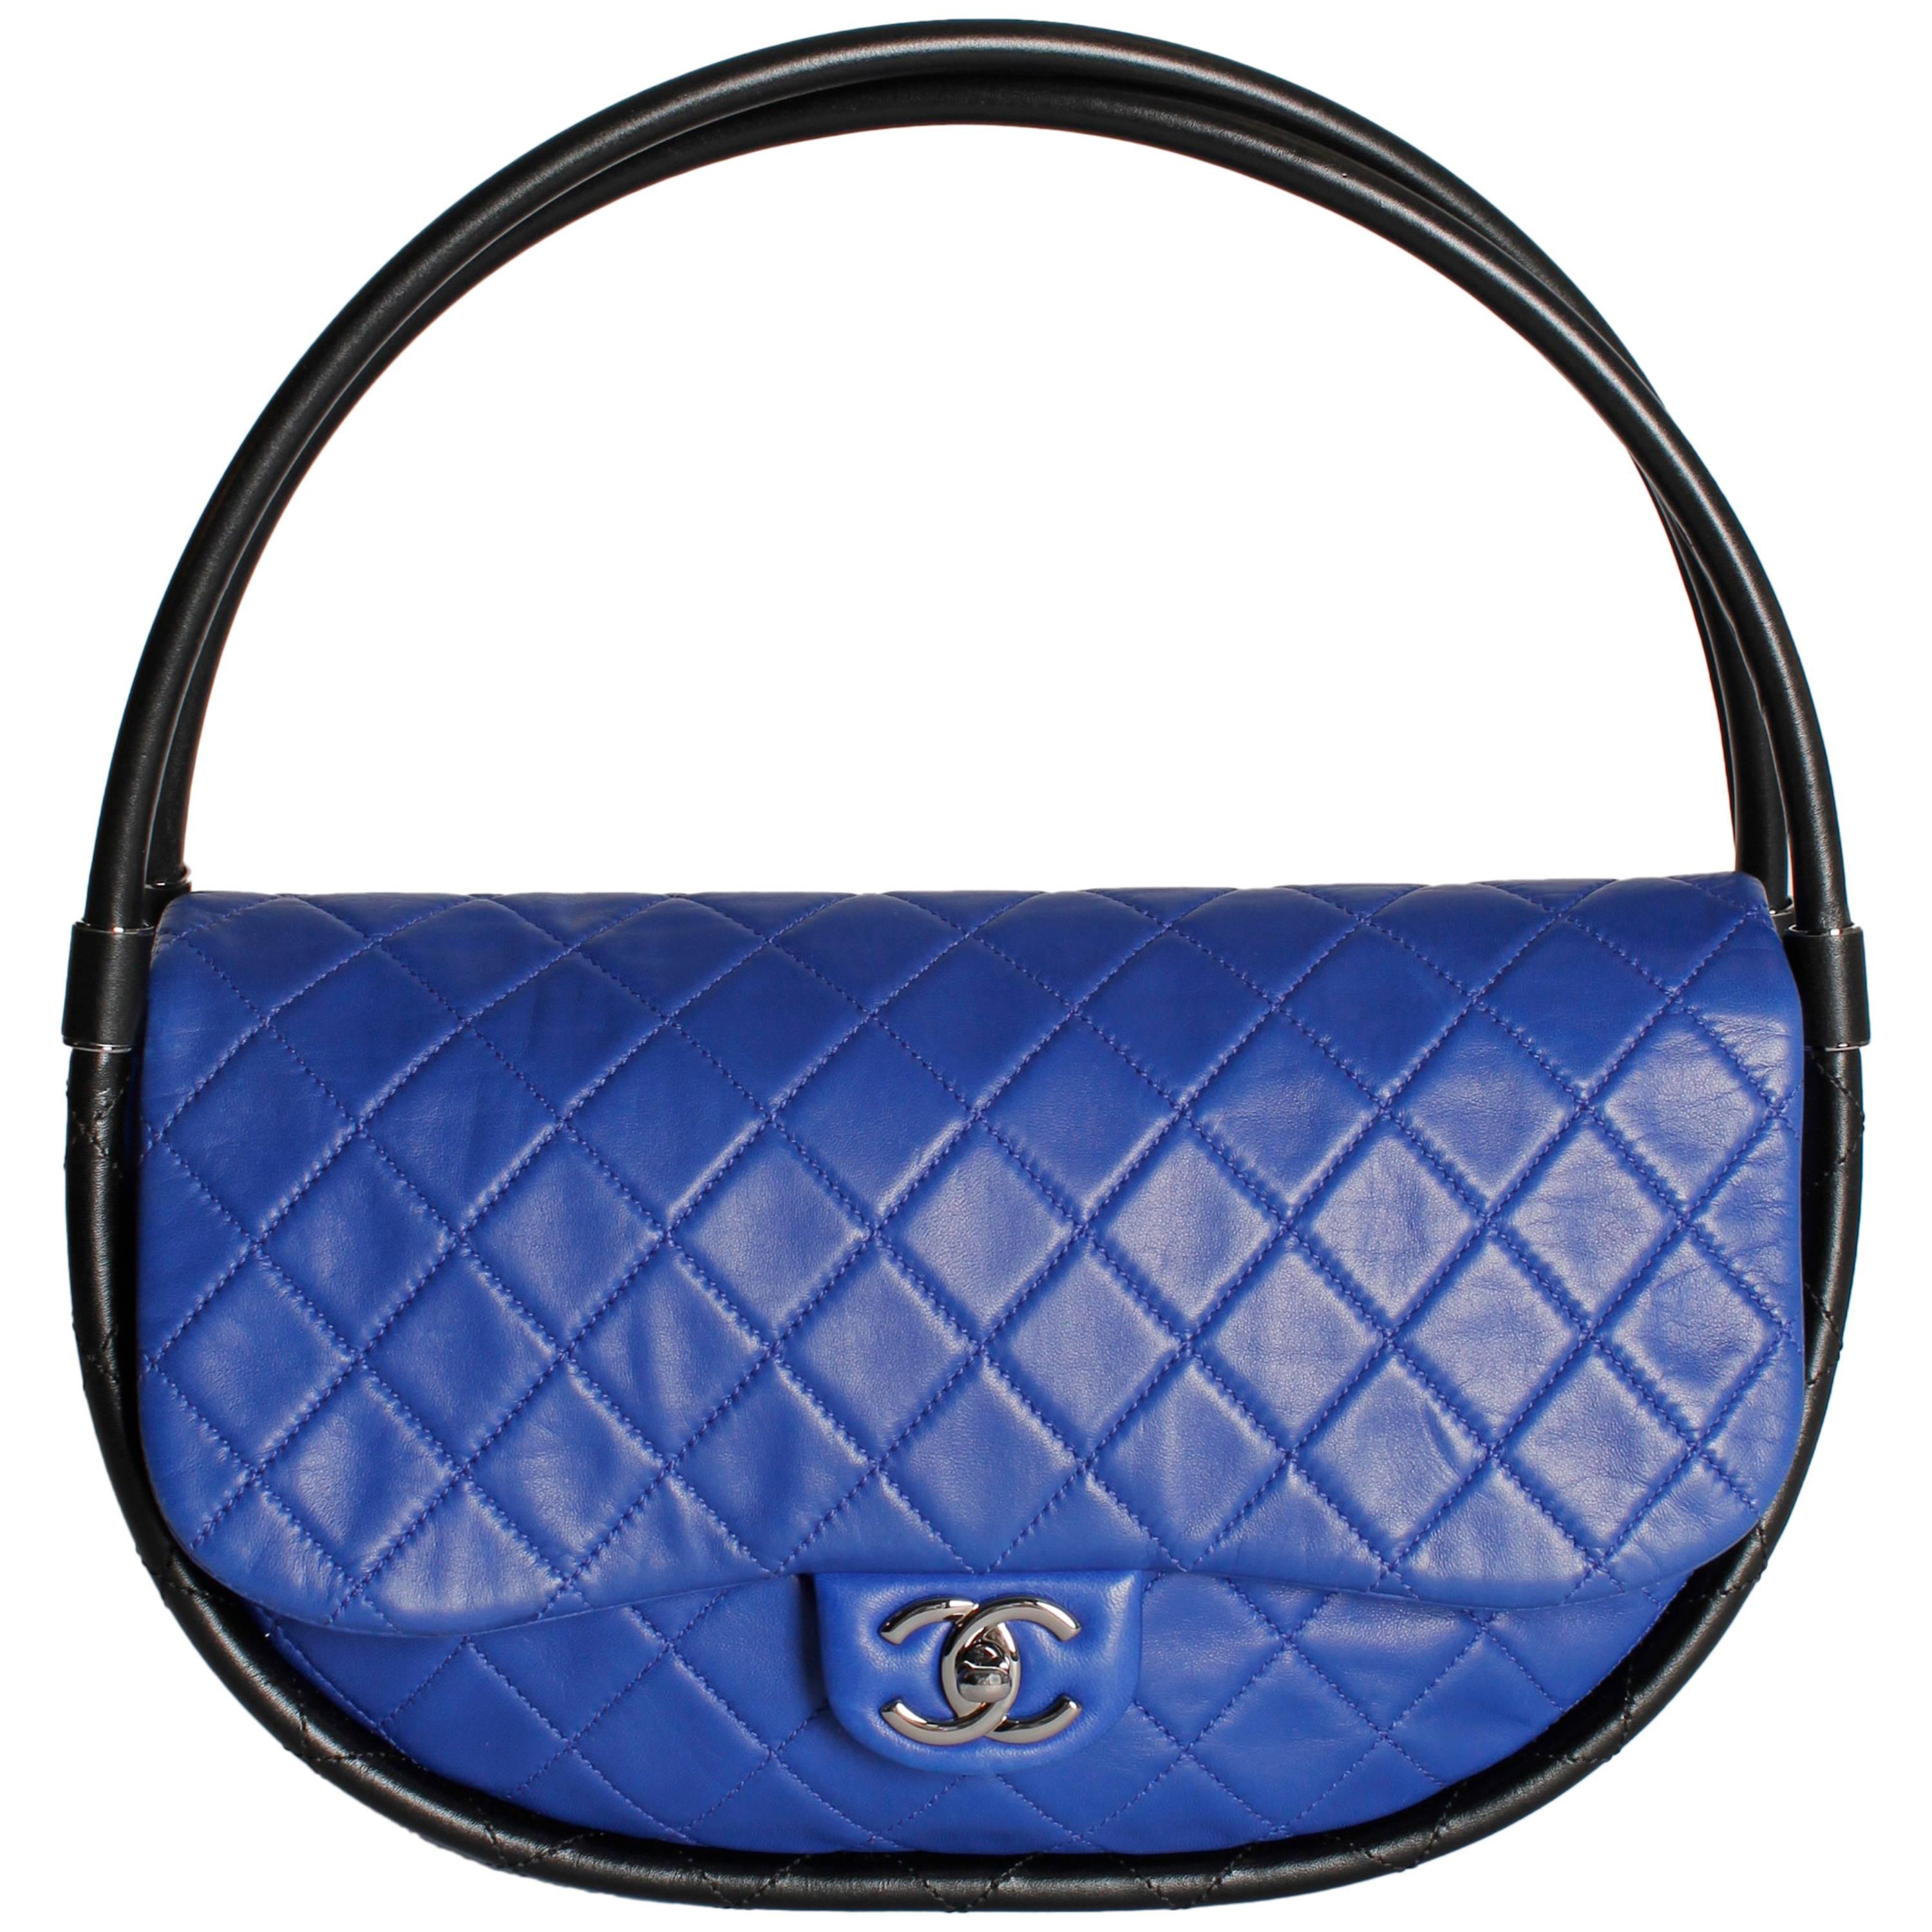 Chanel Hula Hoop Medium Bag Limited Edition - cobalt blue/black